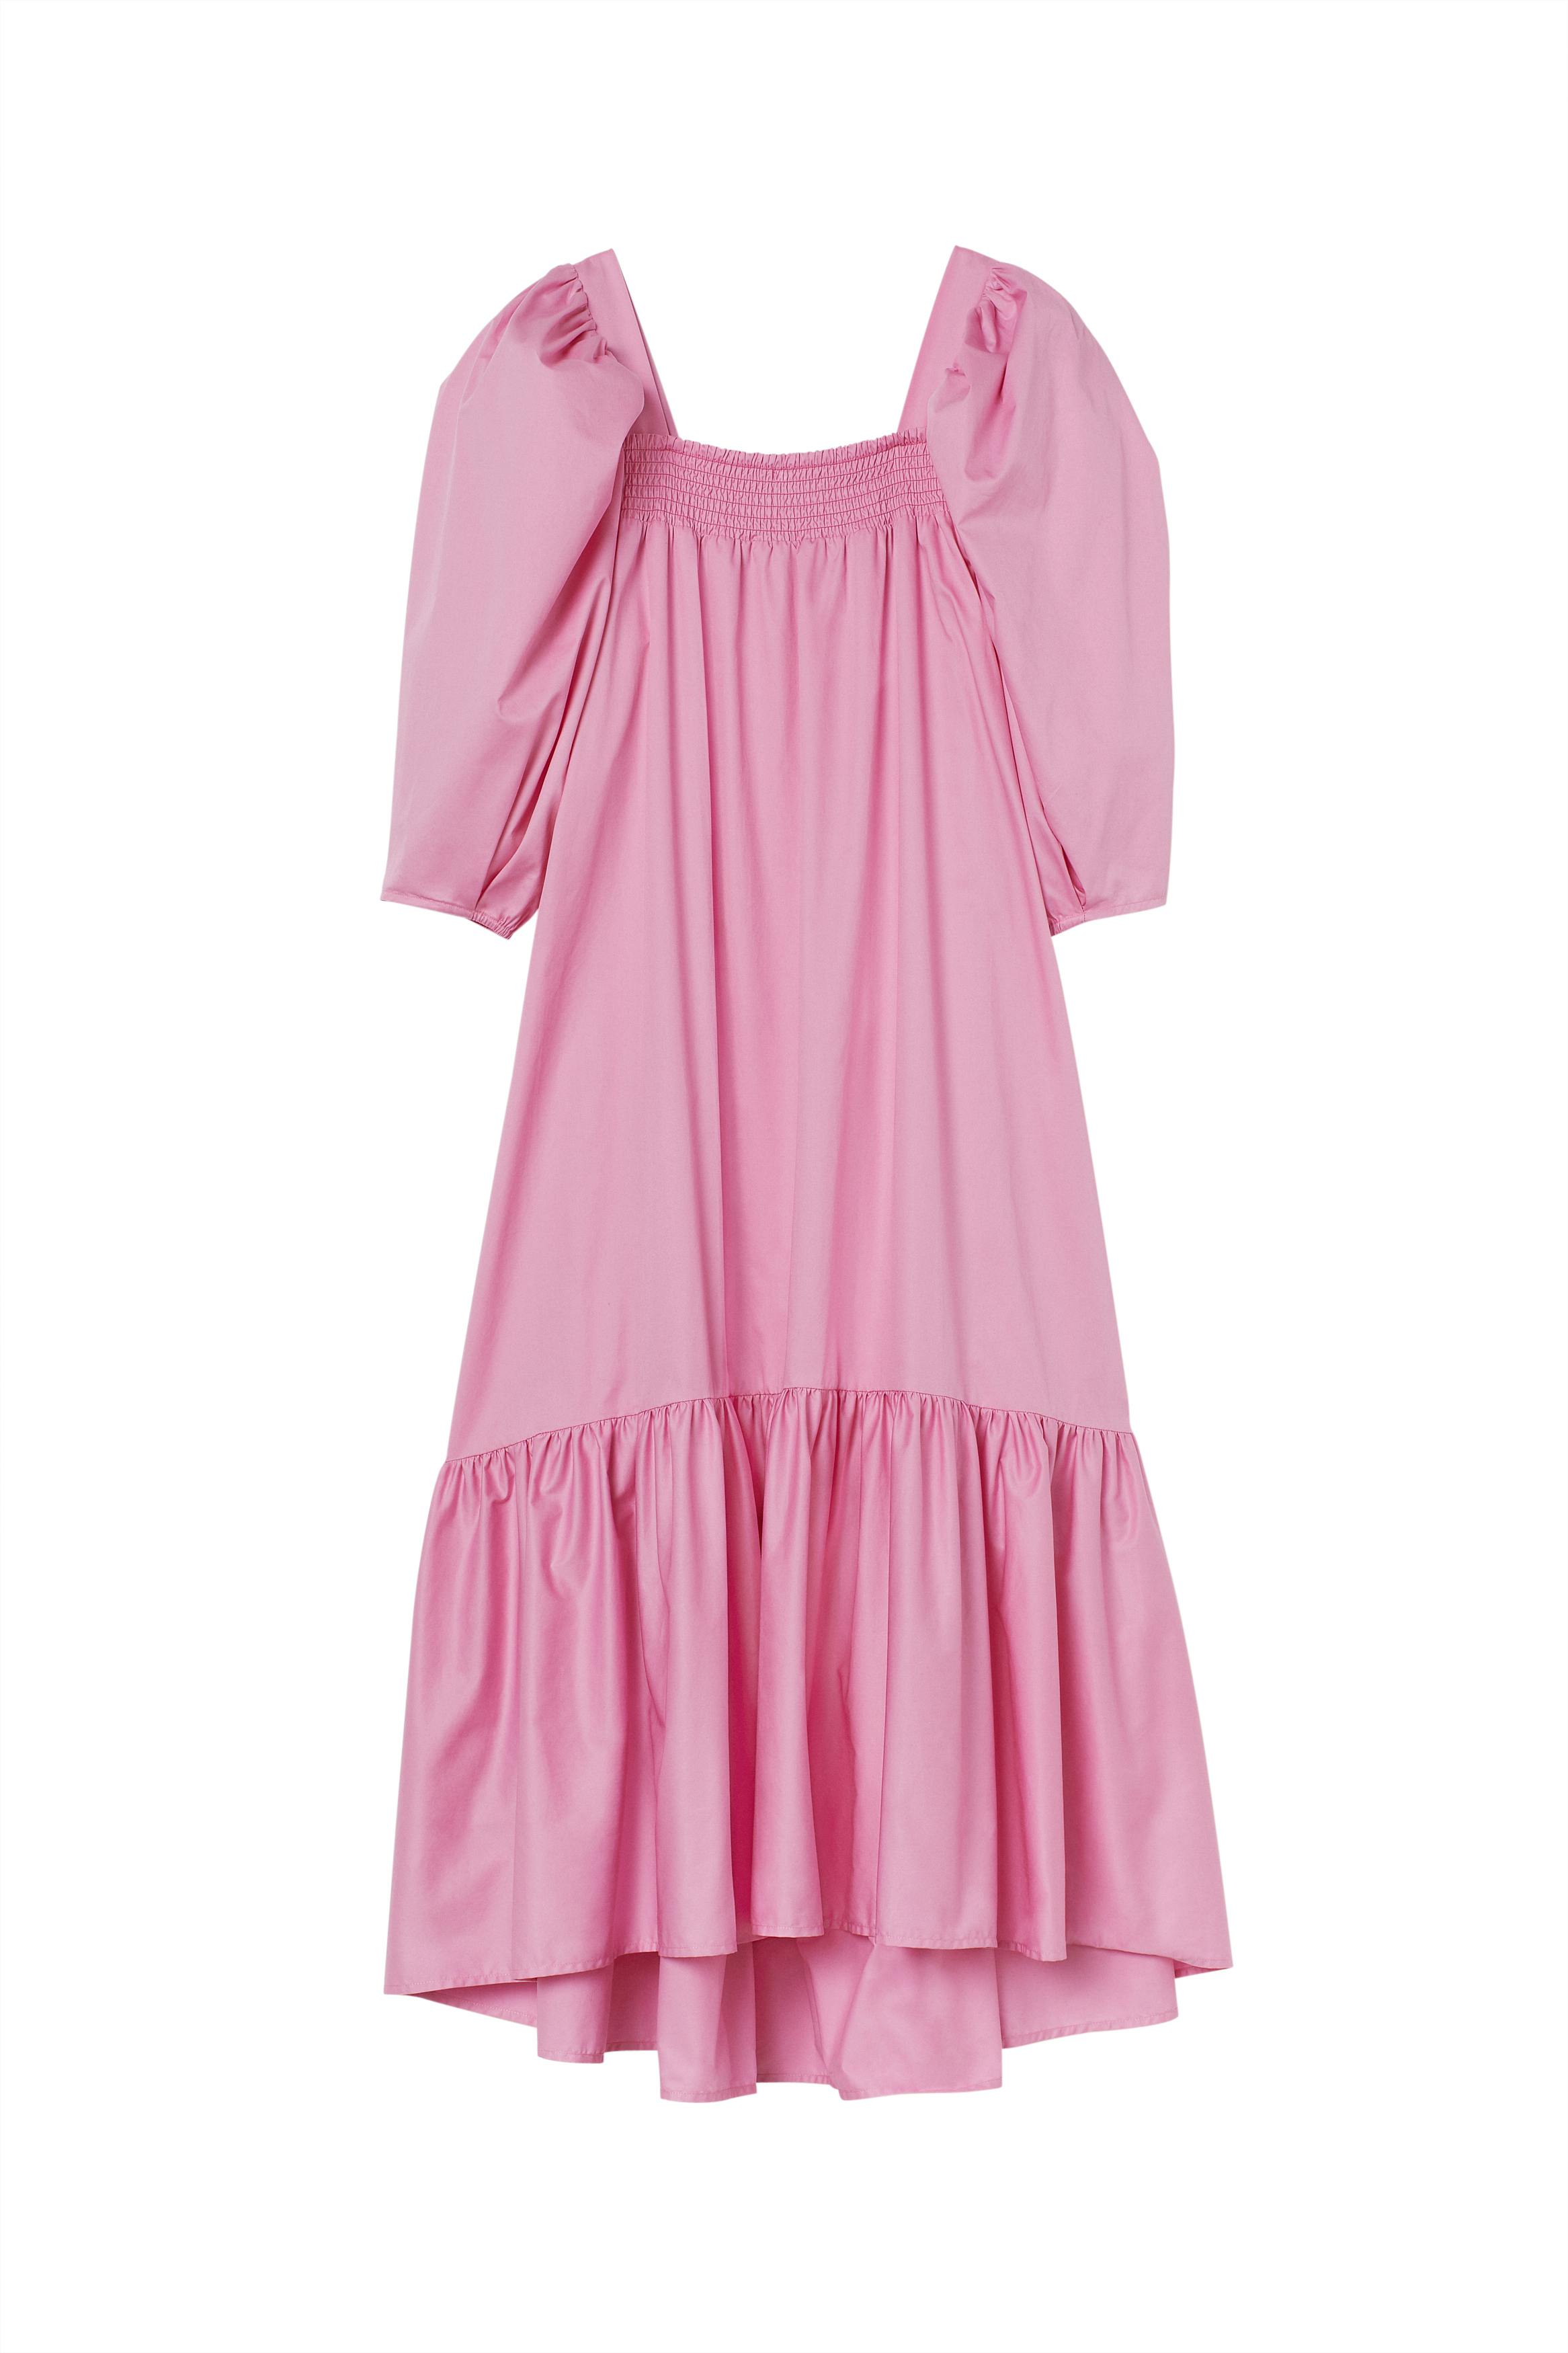 h&m pink puff sleeve dress